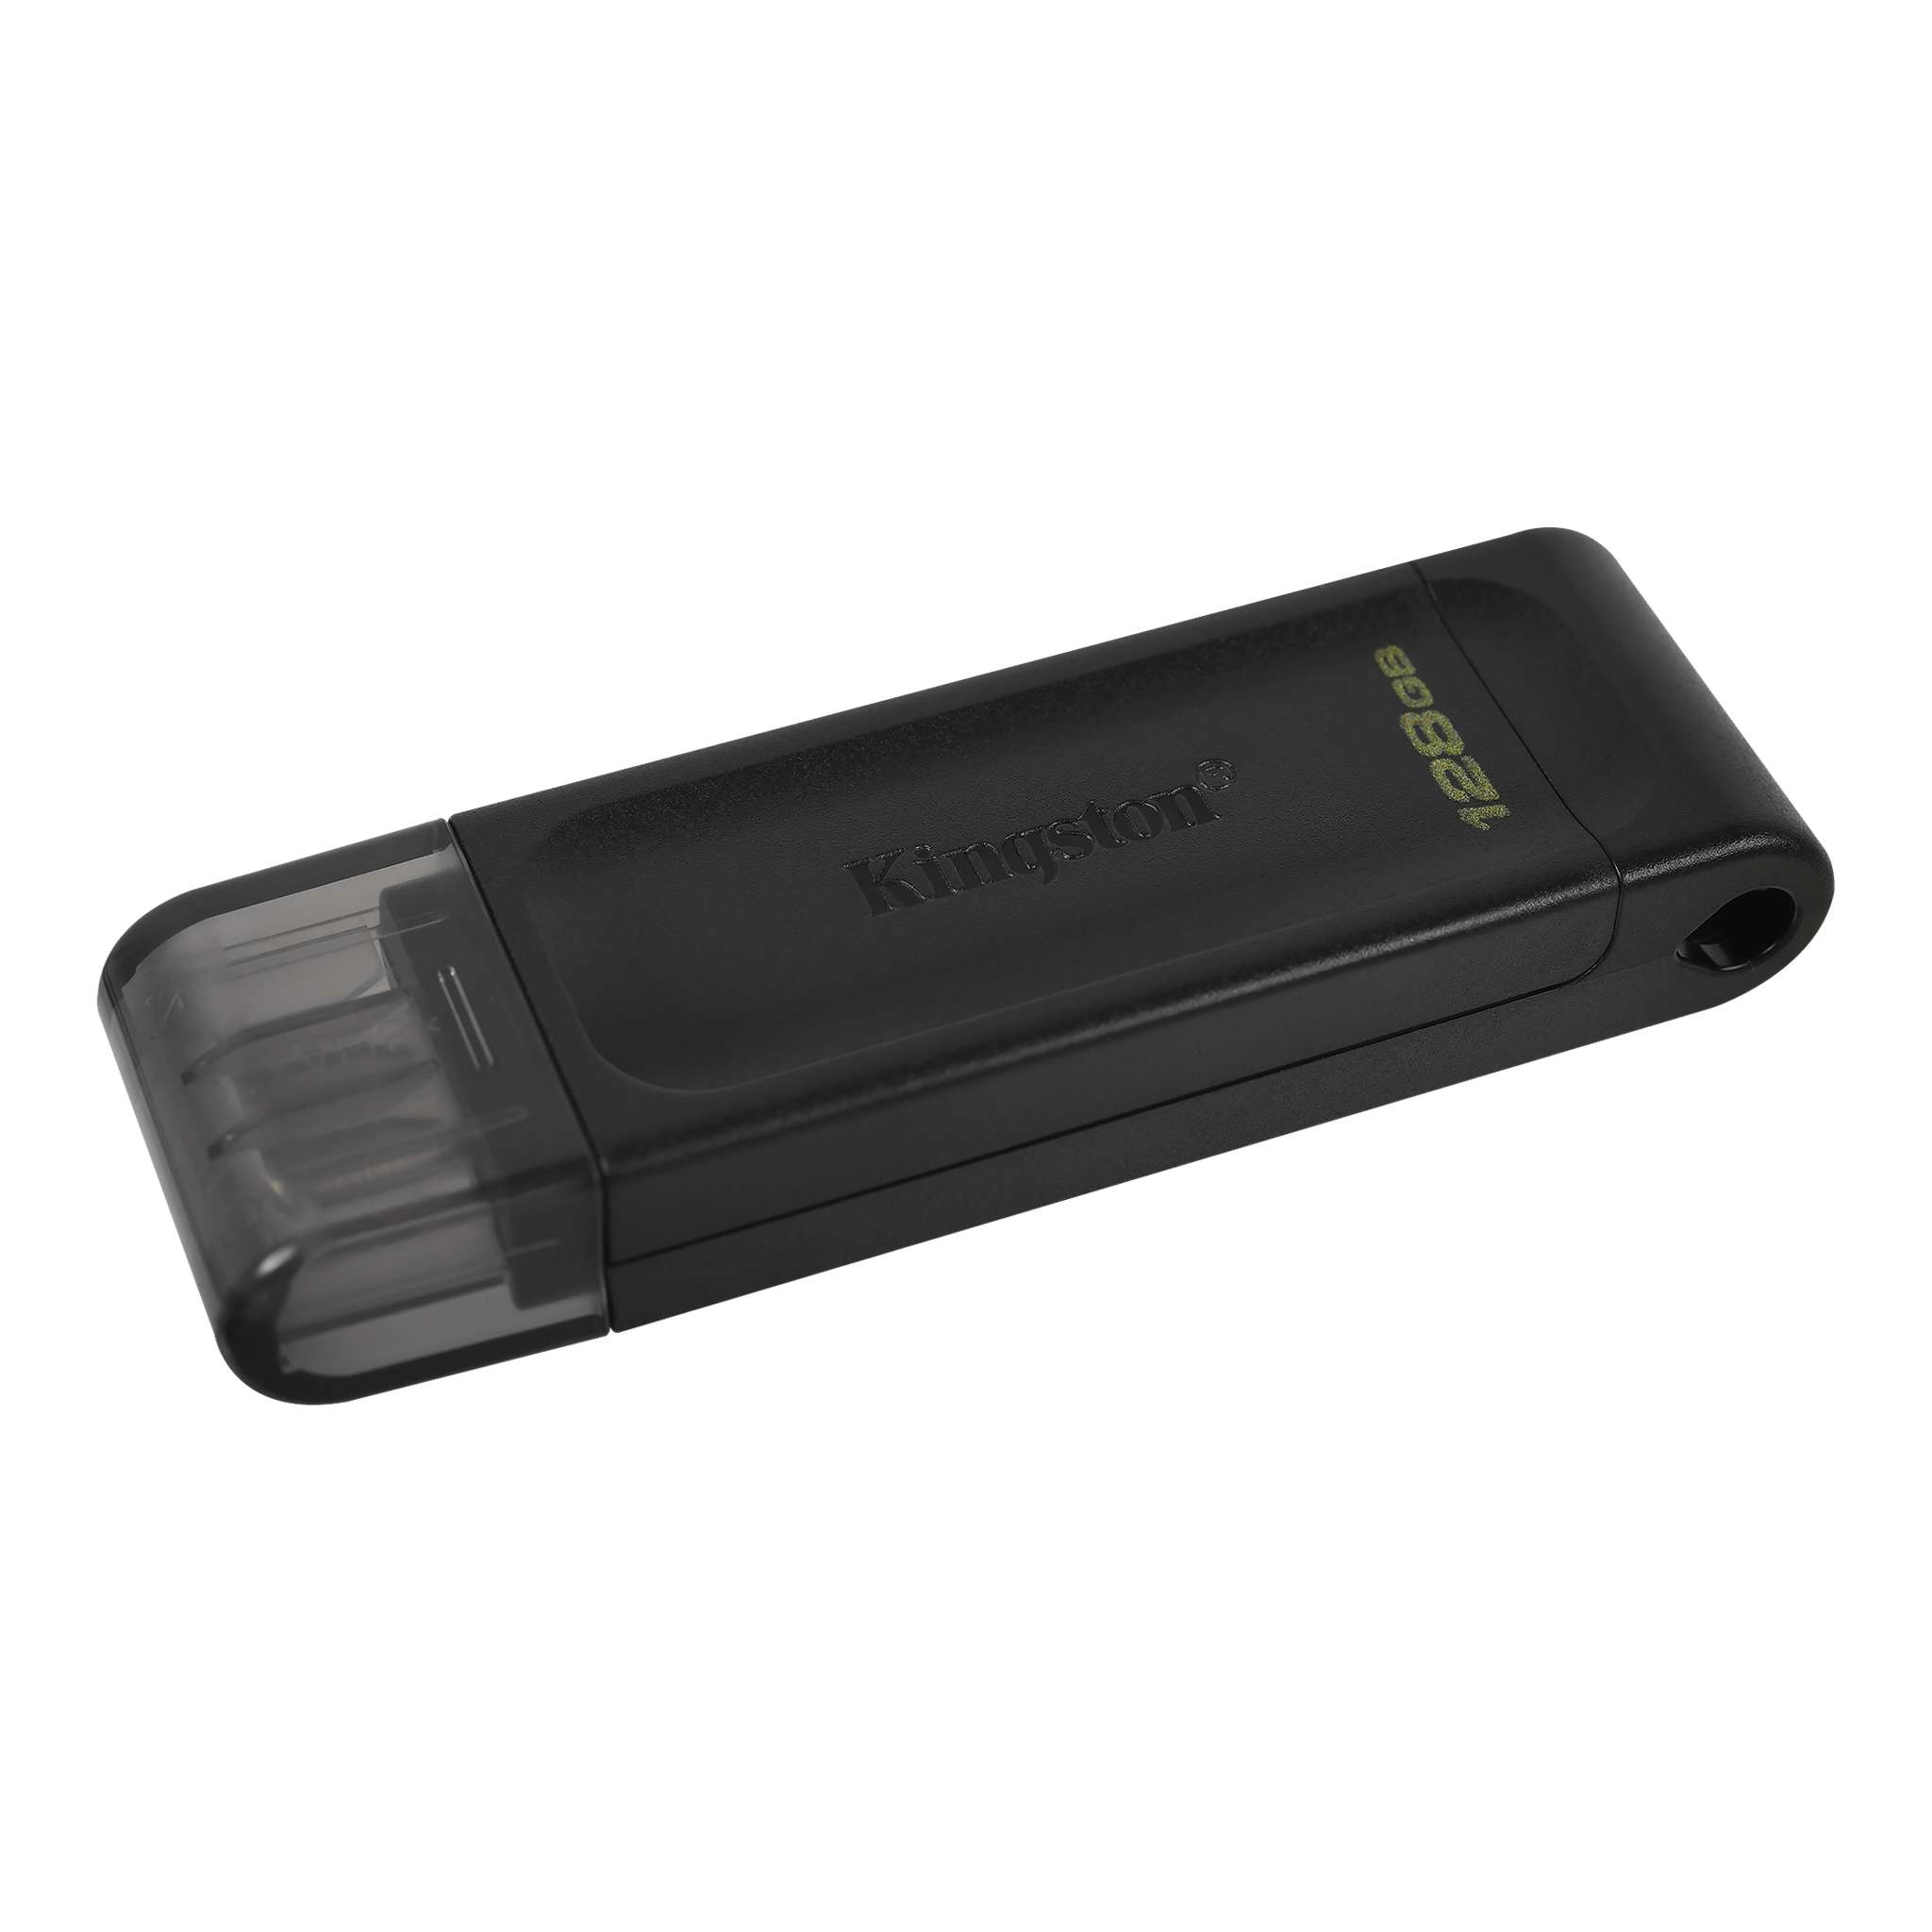 USB Flash Drive Kingston DataTraveler 70 128GB